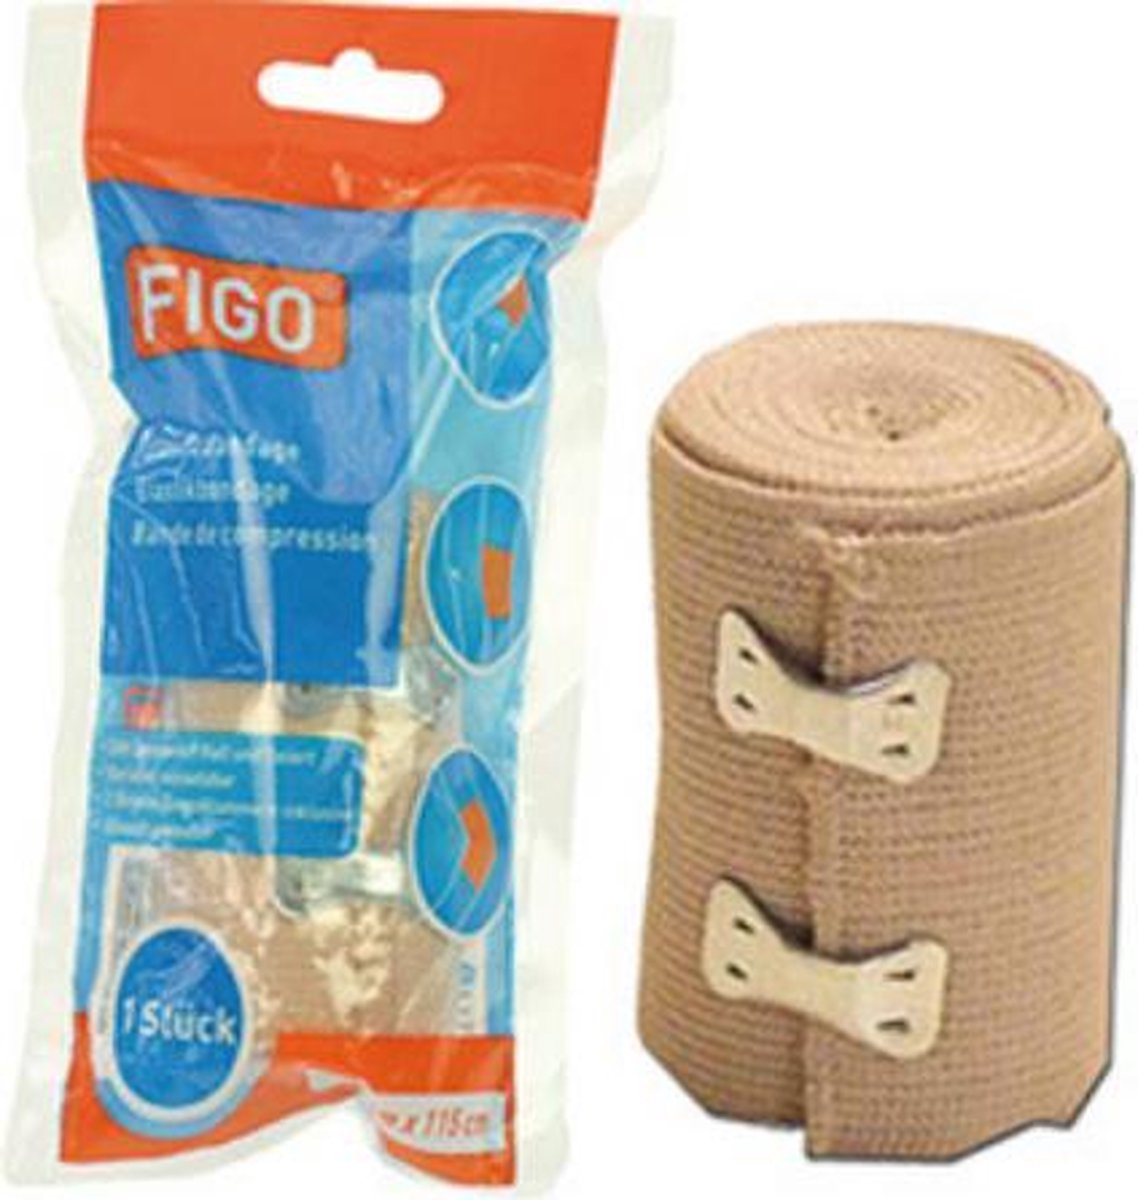 FIGO Elastic bandage 1 stuck 7,5 cm x 115 cm